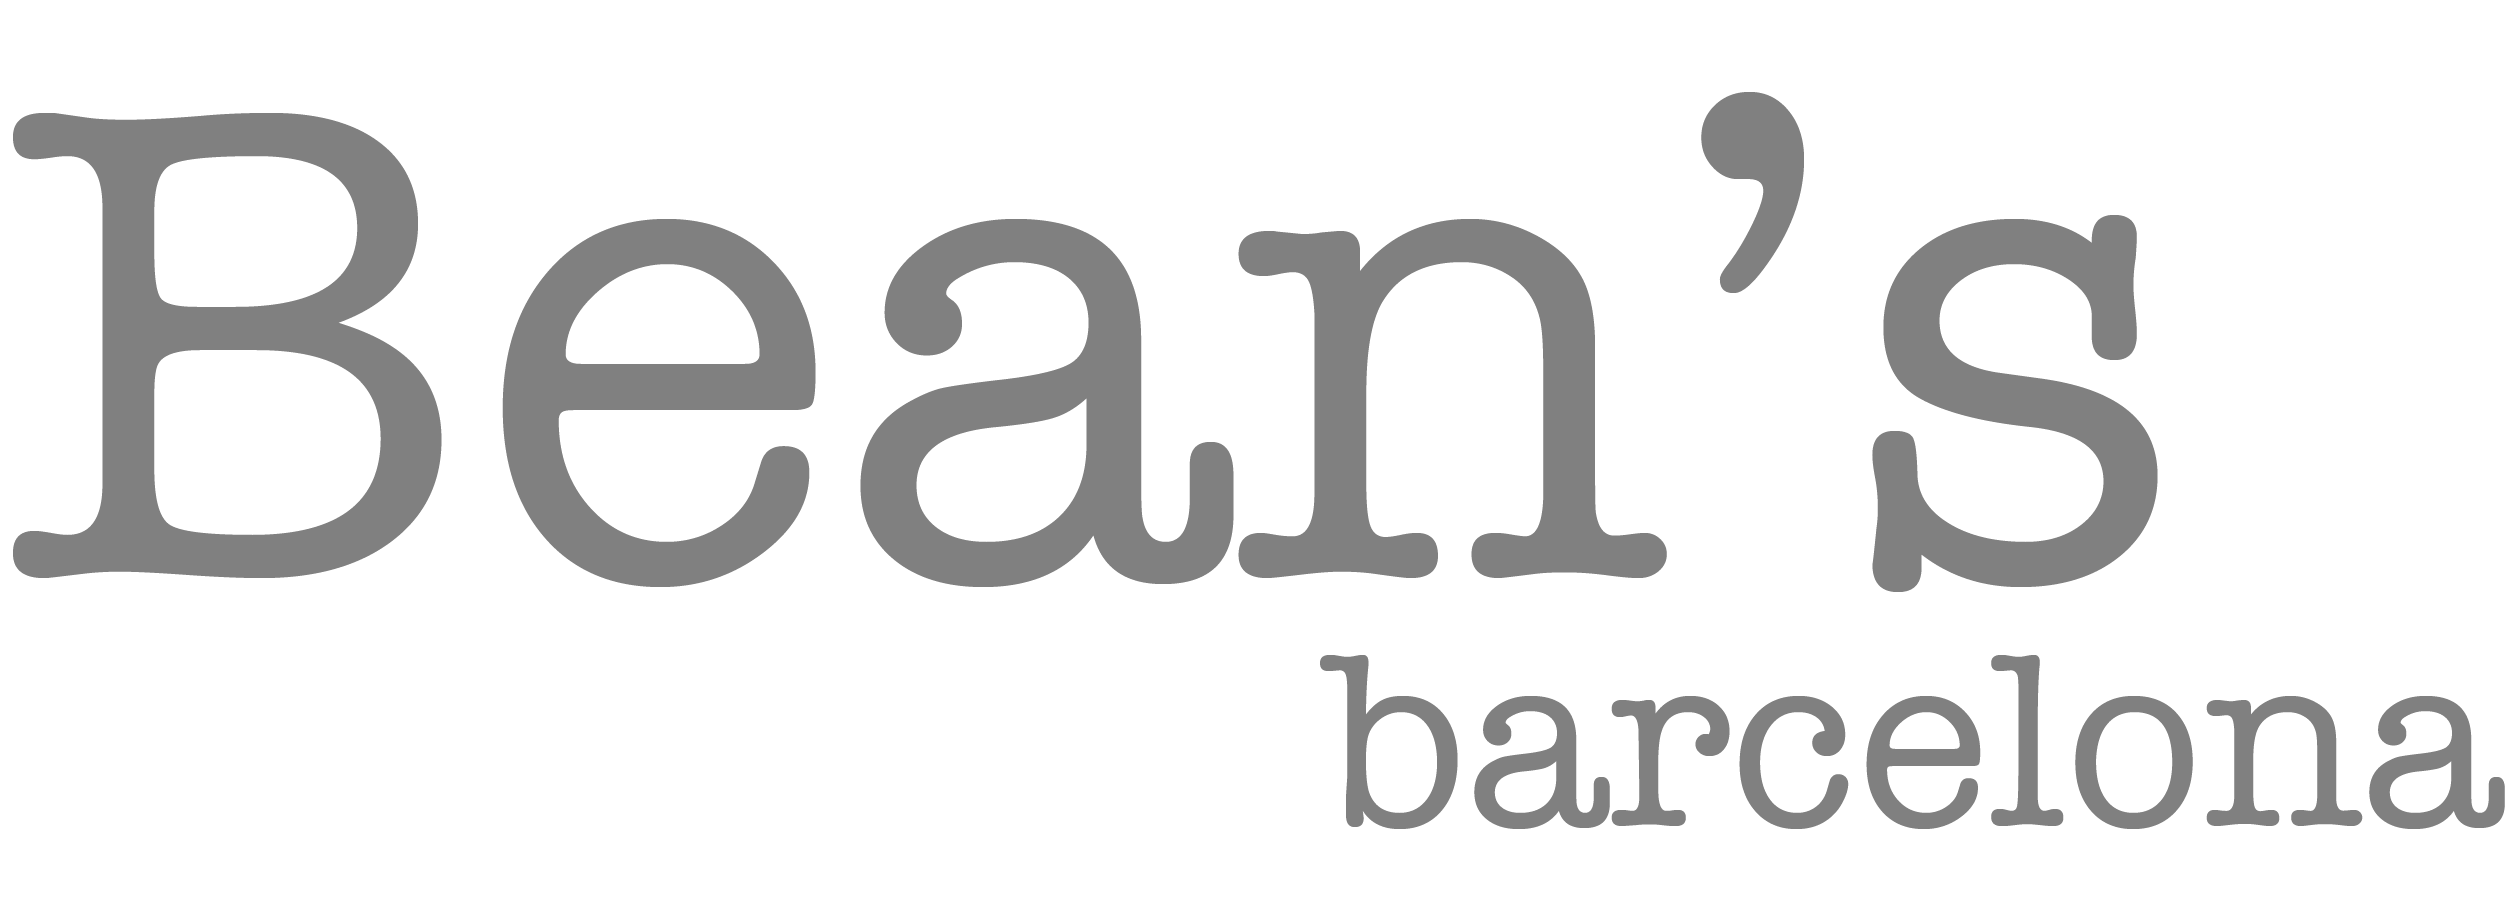 Bean's Barcelona